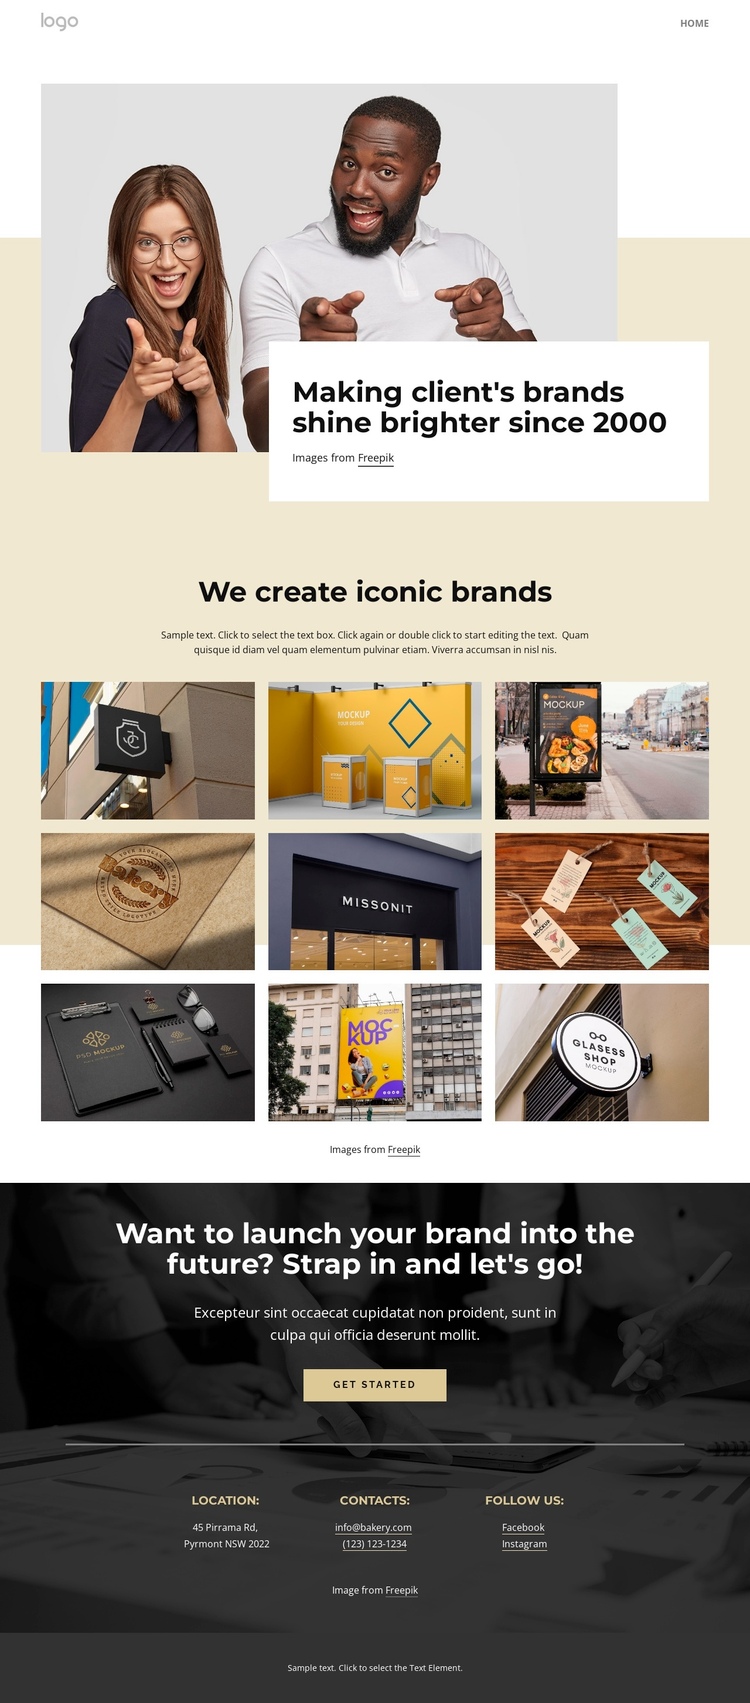 We create iconic brands Website Builder Software